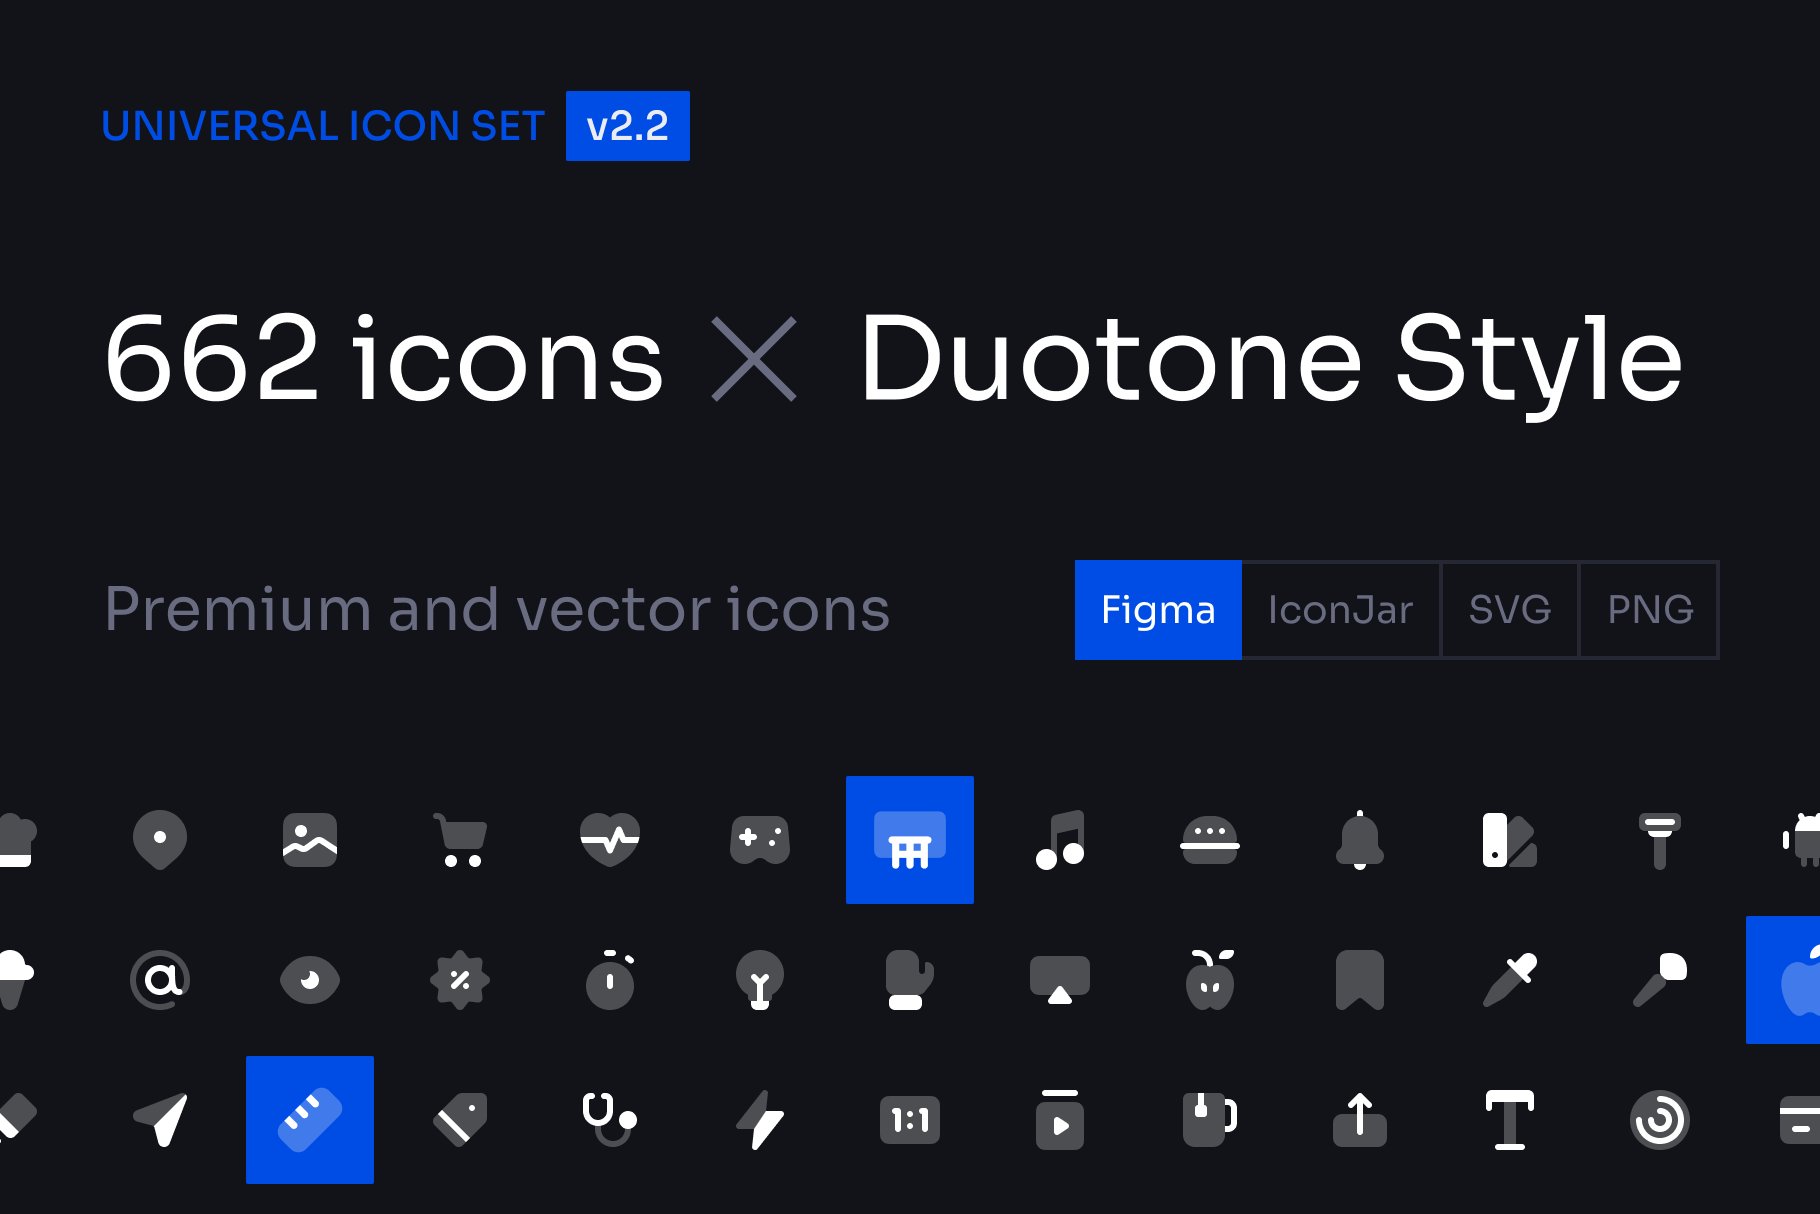 Universal Icon Set v2.2 | Duotone cover image.